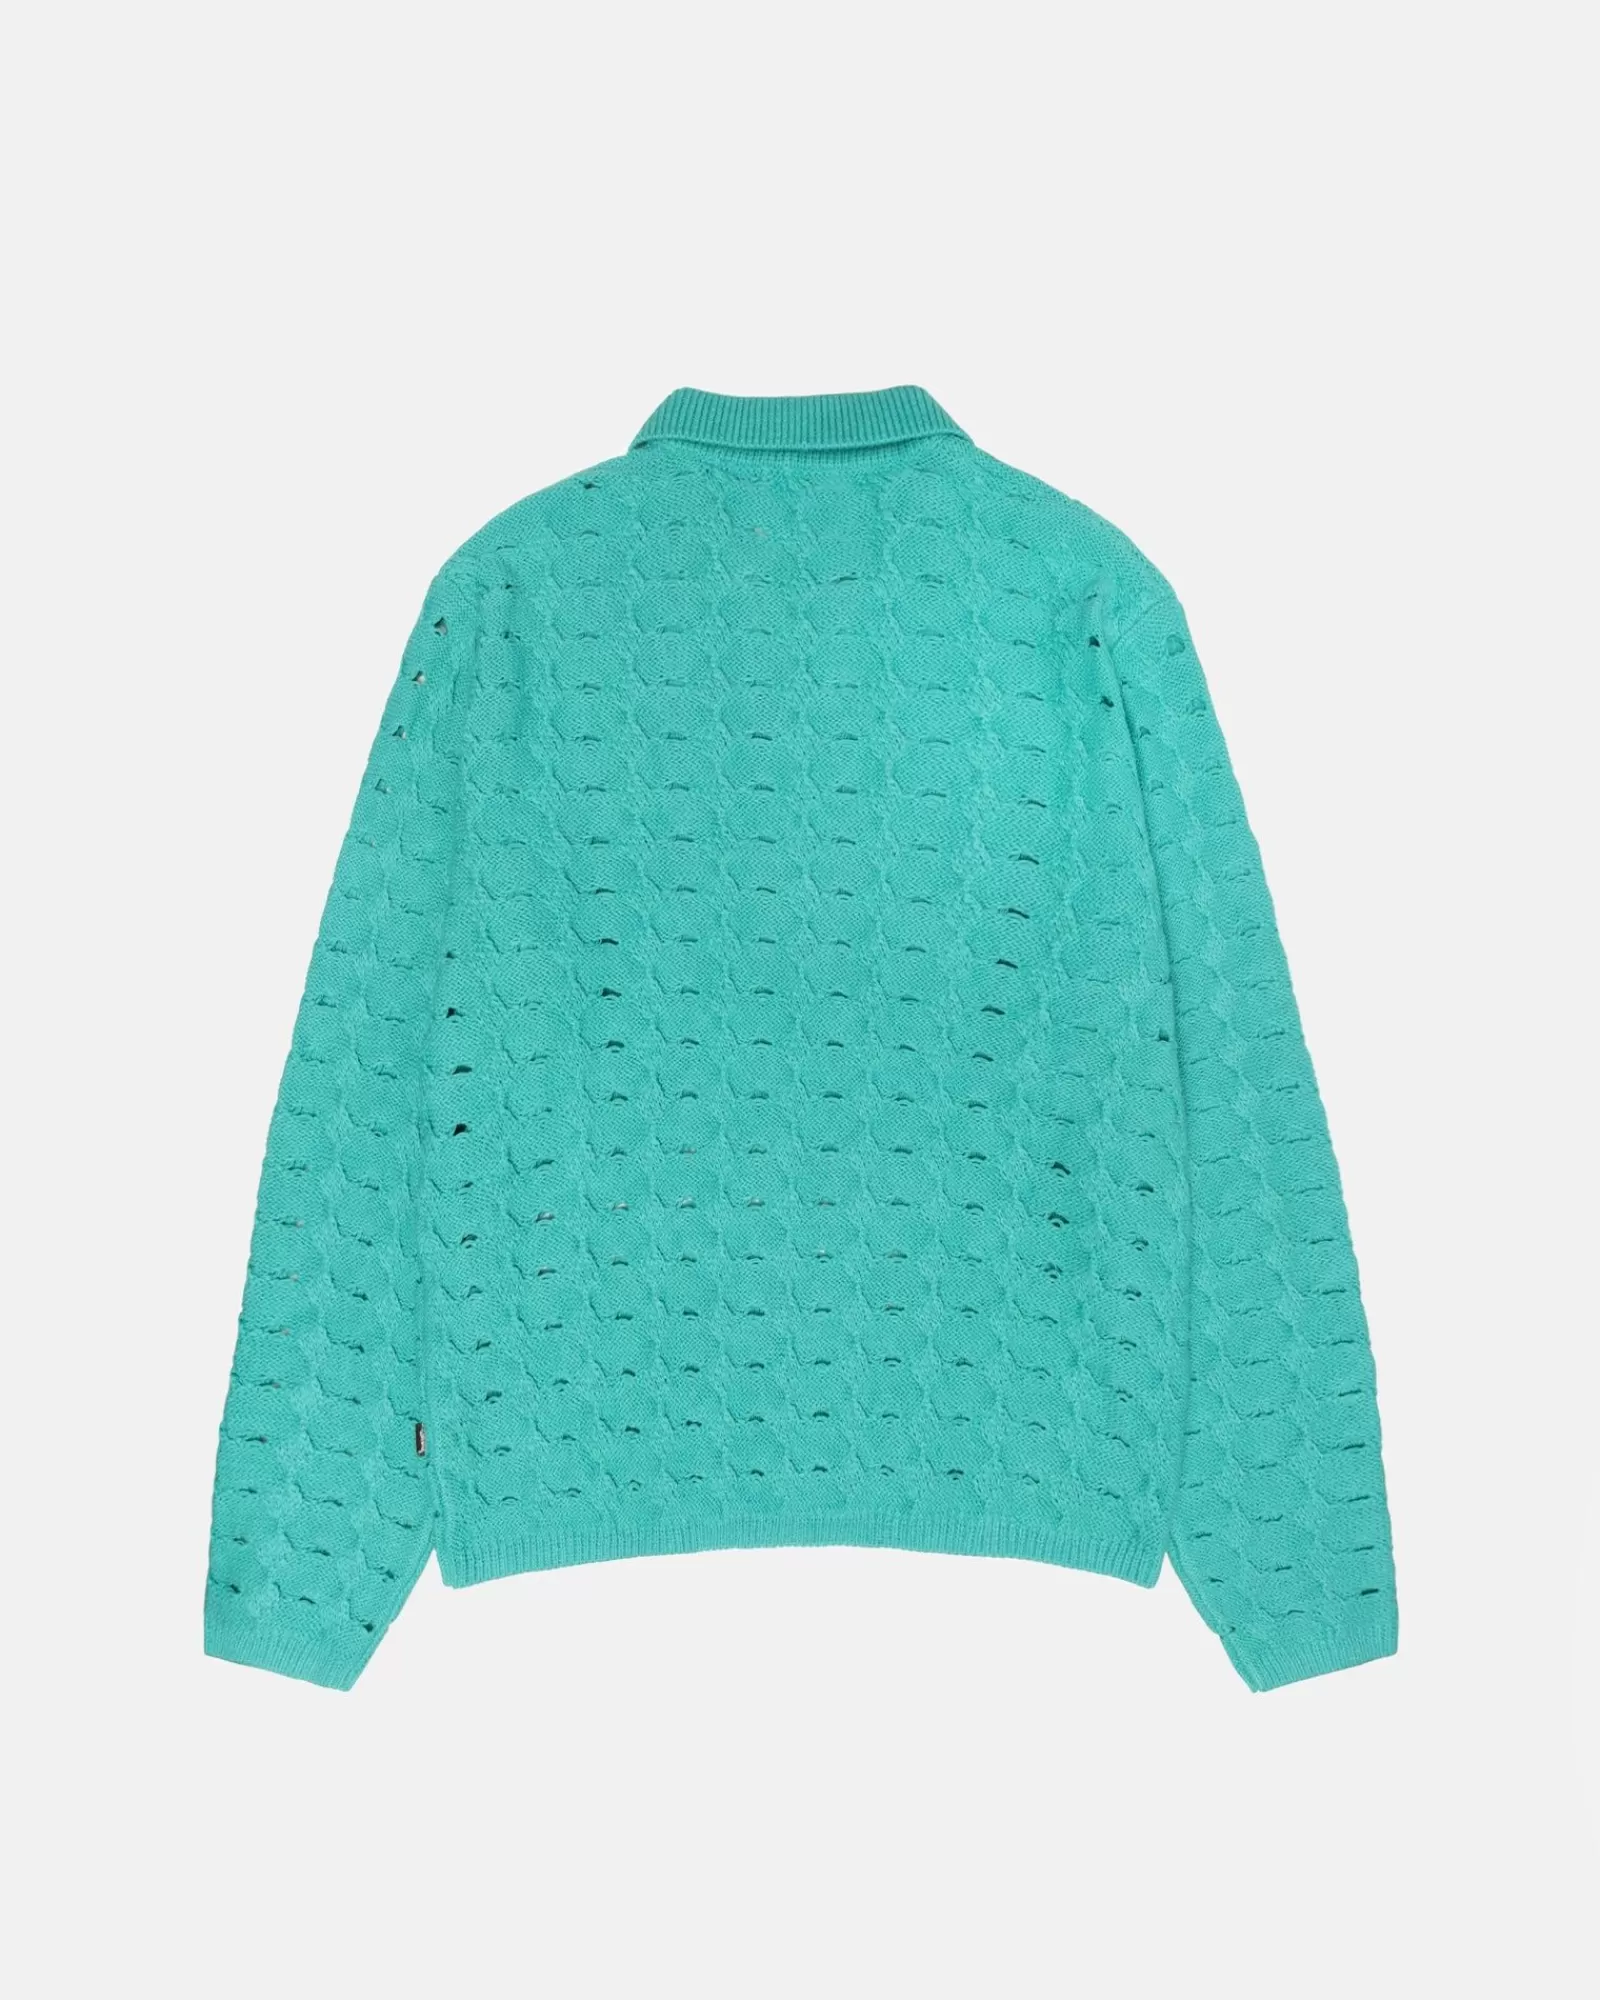 Stüssy Open Knit Collared Sweater Best